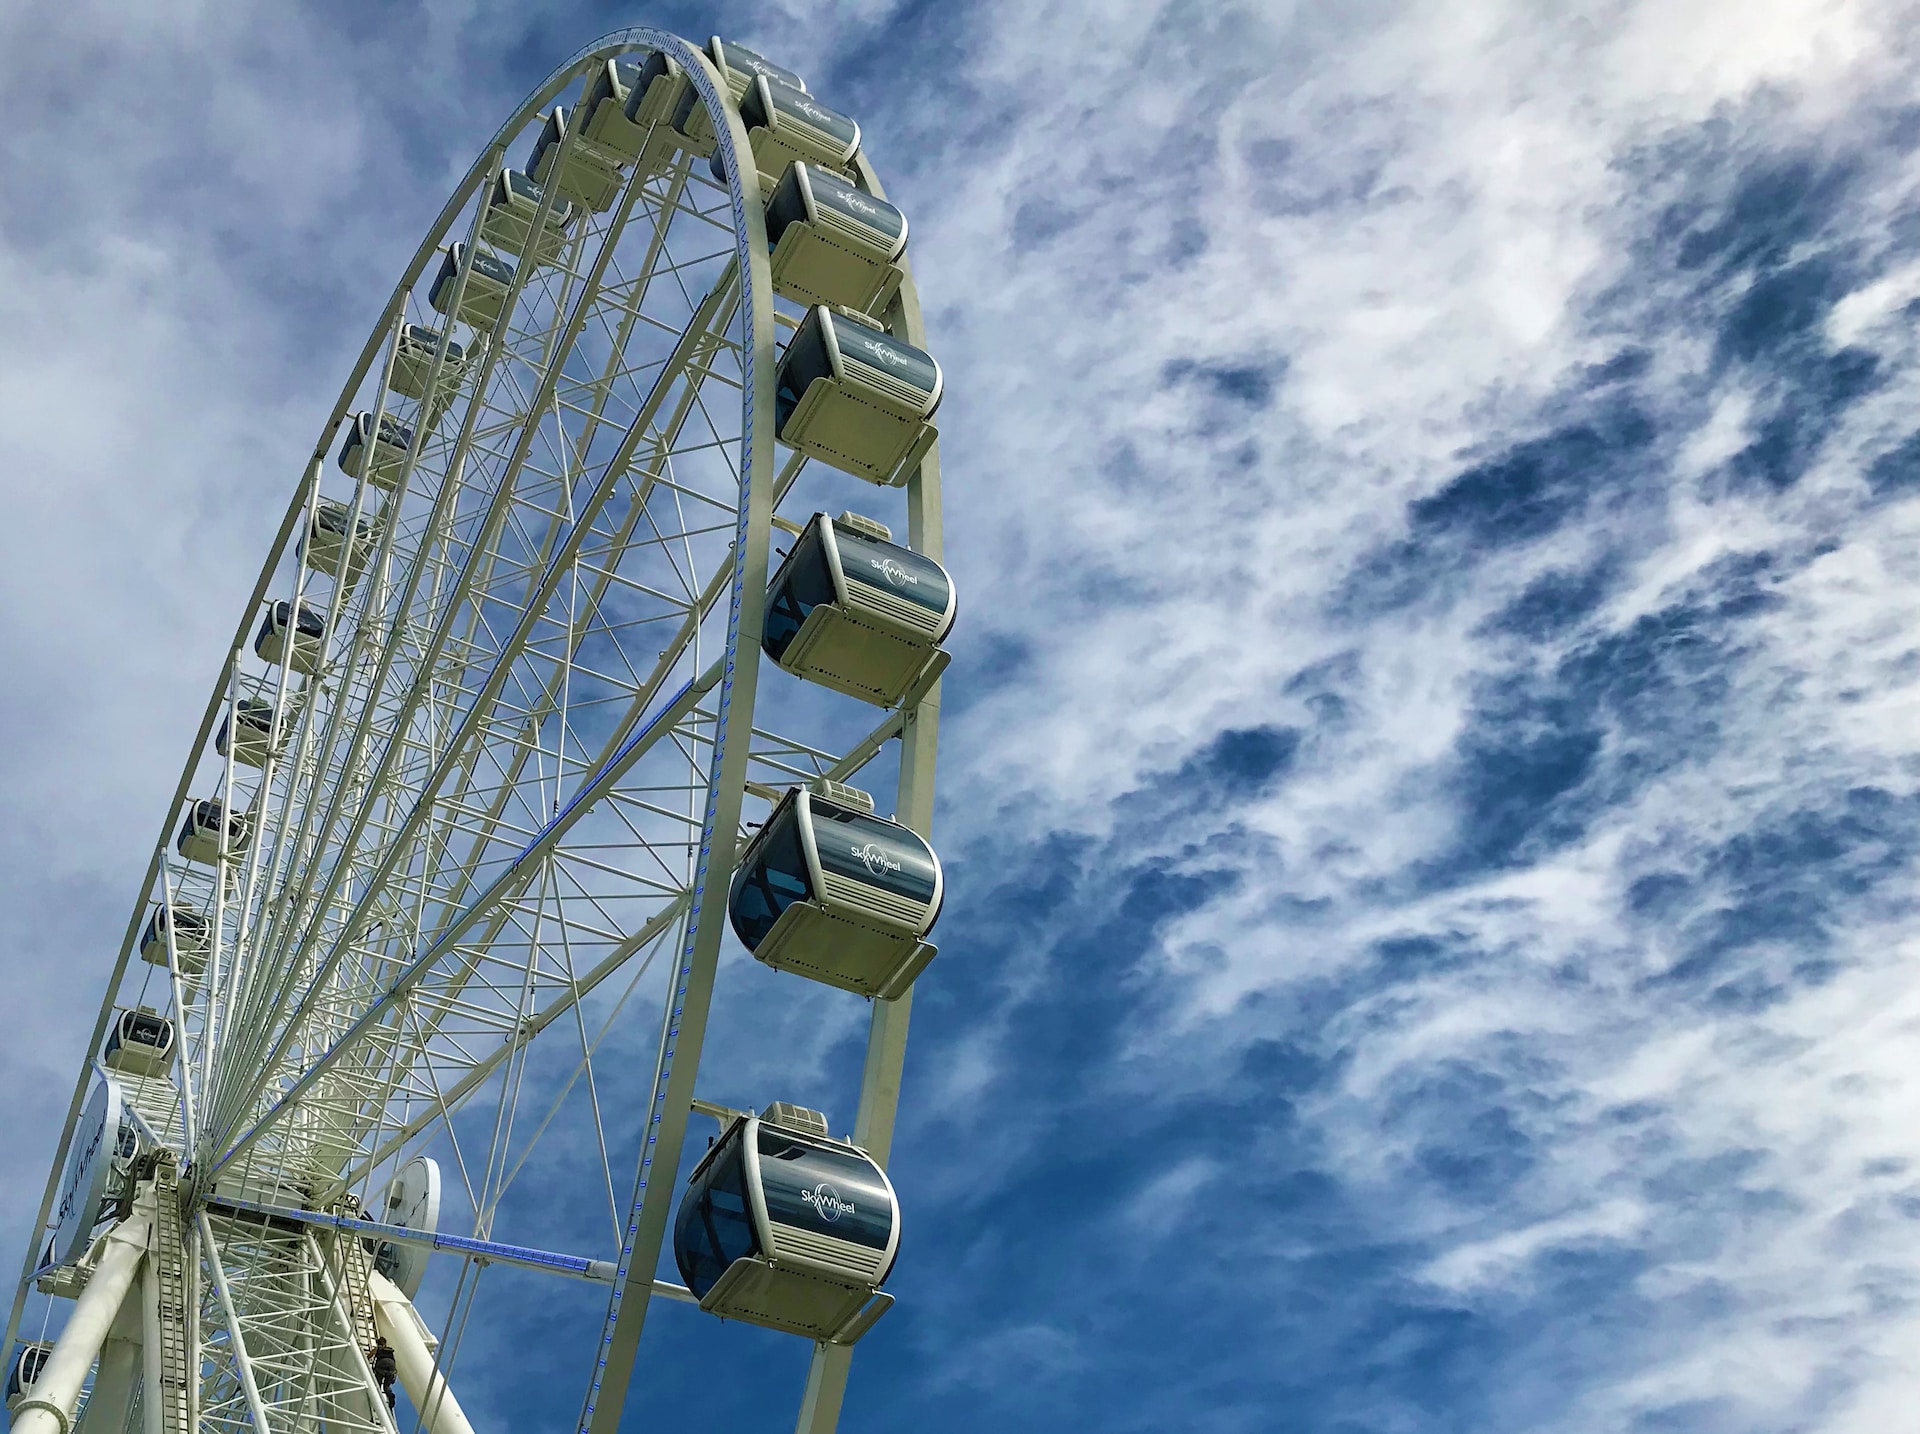 The Ferris wheel at Myrtle Beach.